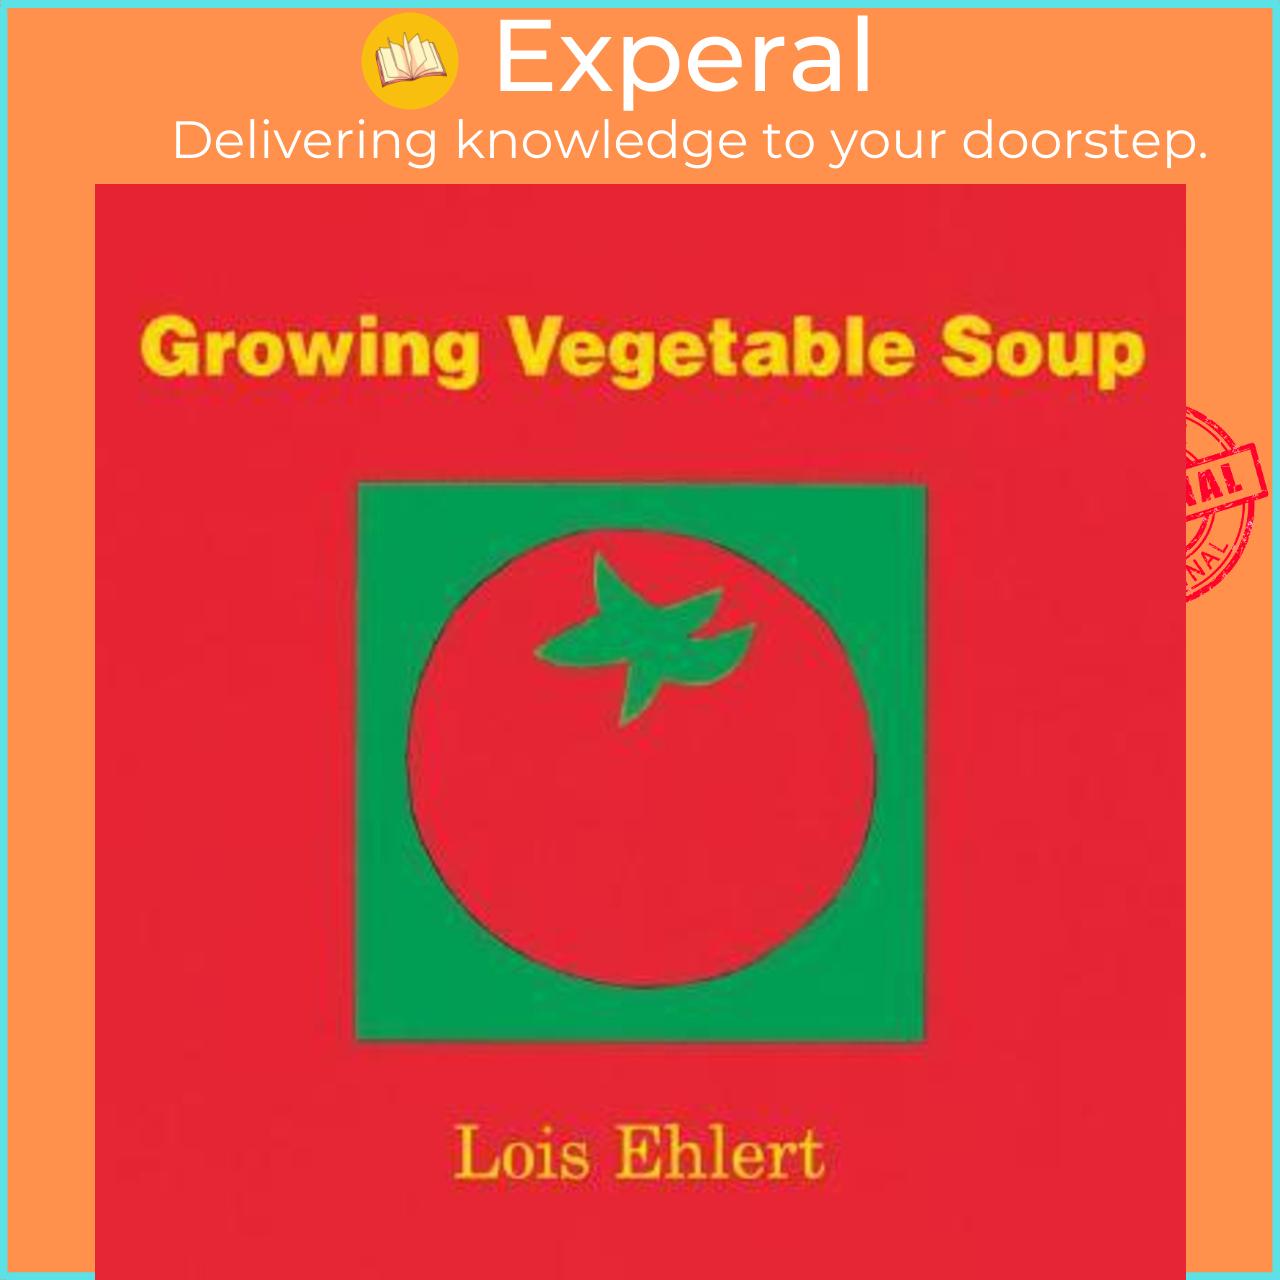 Hình ảnh Sách - Growing Vegetable Soup by Lois Ehlert (US edition, paperback)